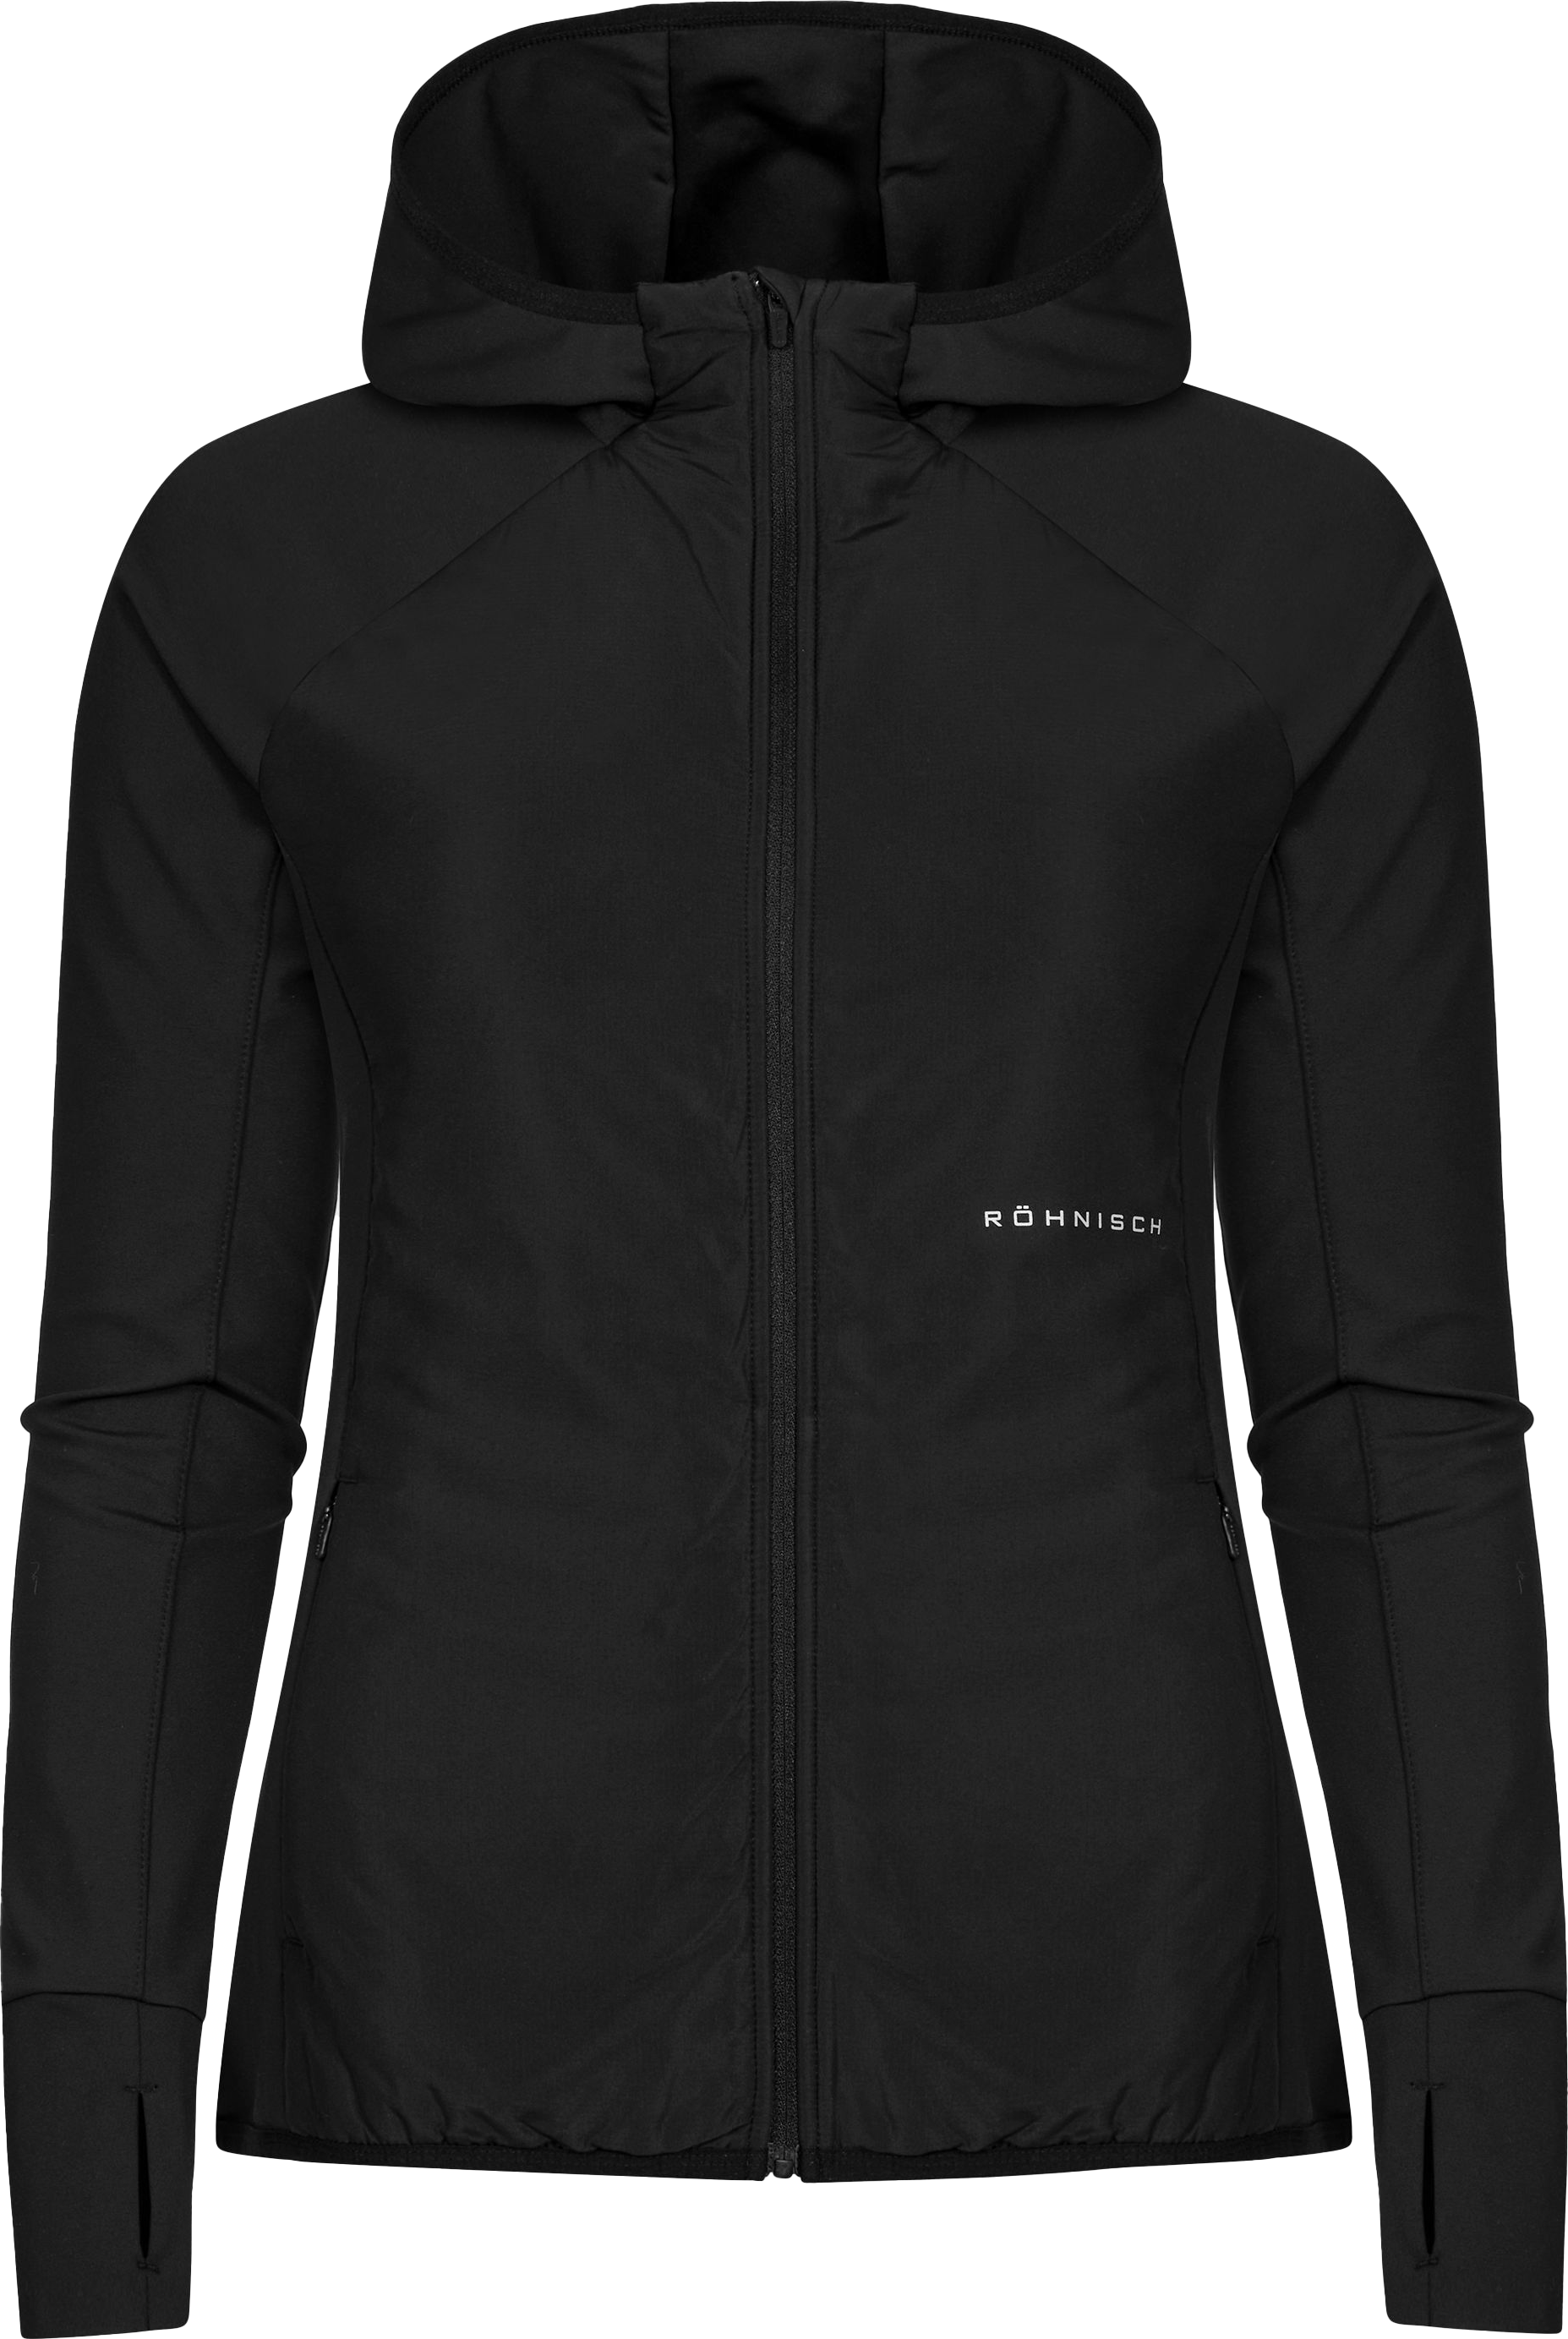 Röhnisch Women’s Free Motion Padded Jacket Black